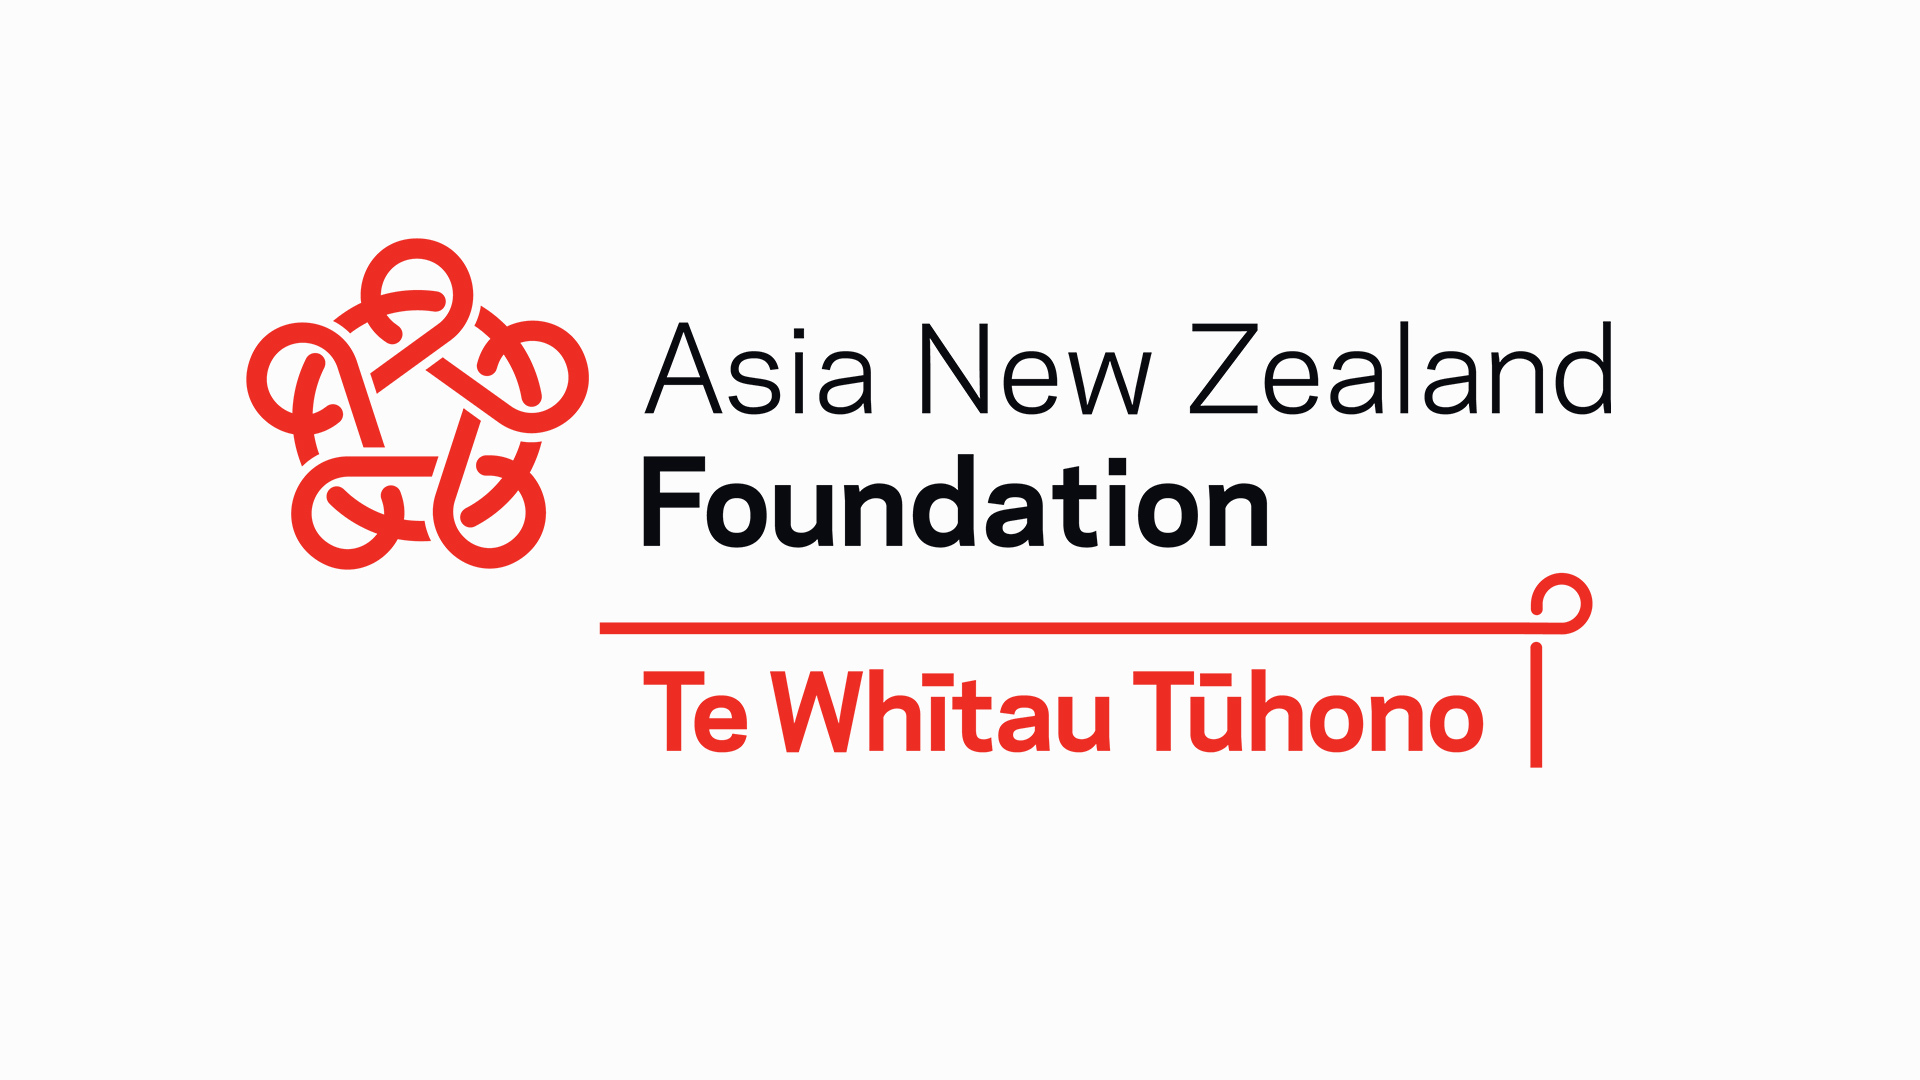 Asia New Zealand Foundation's logo incorporating it's Maori name